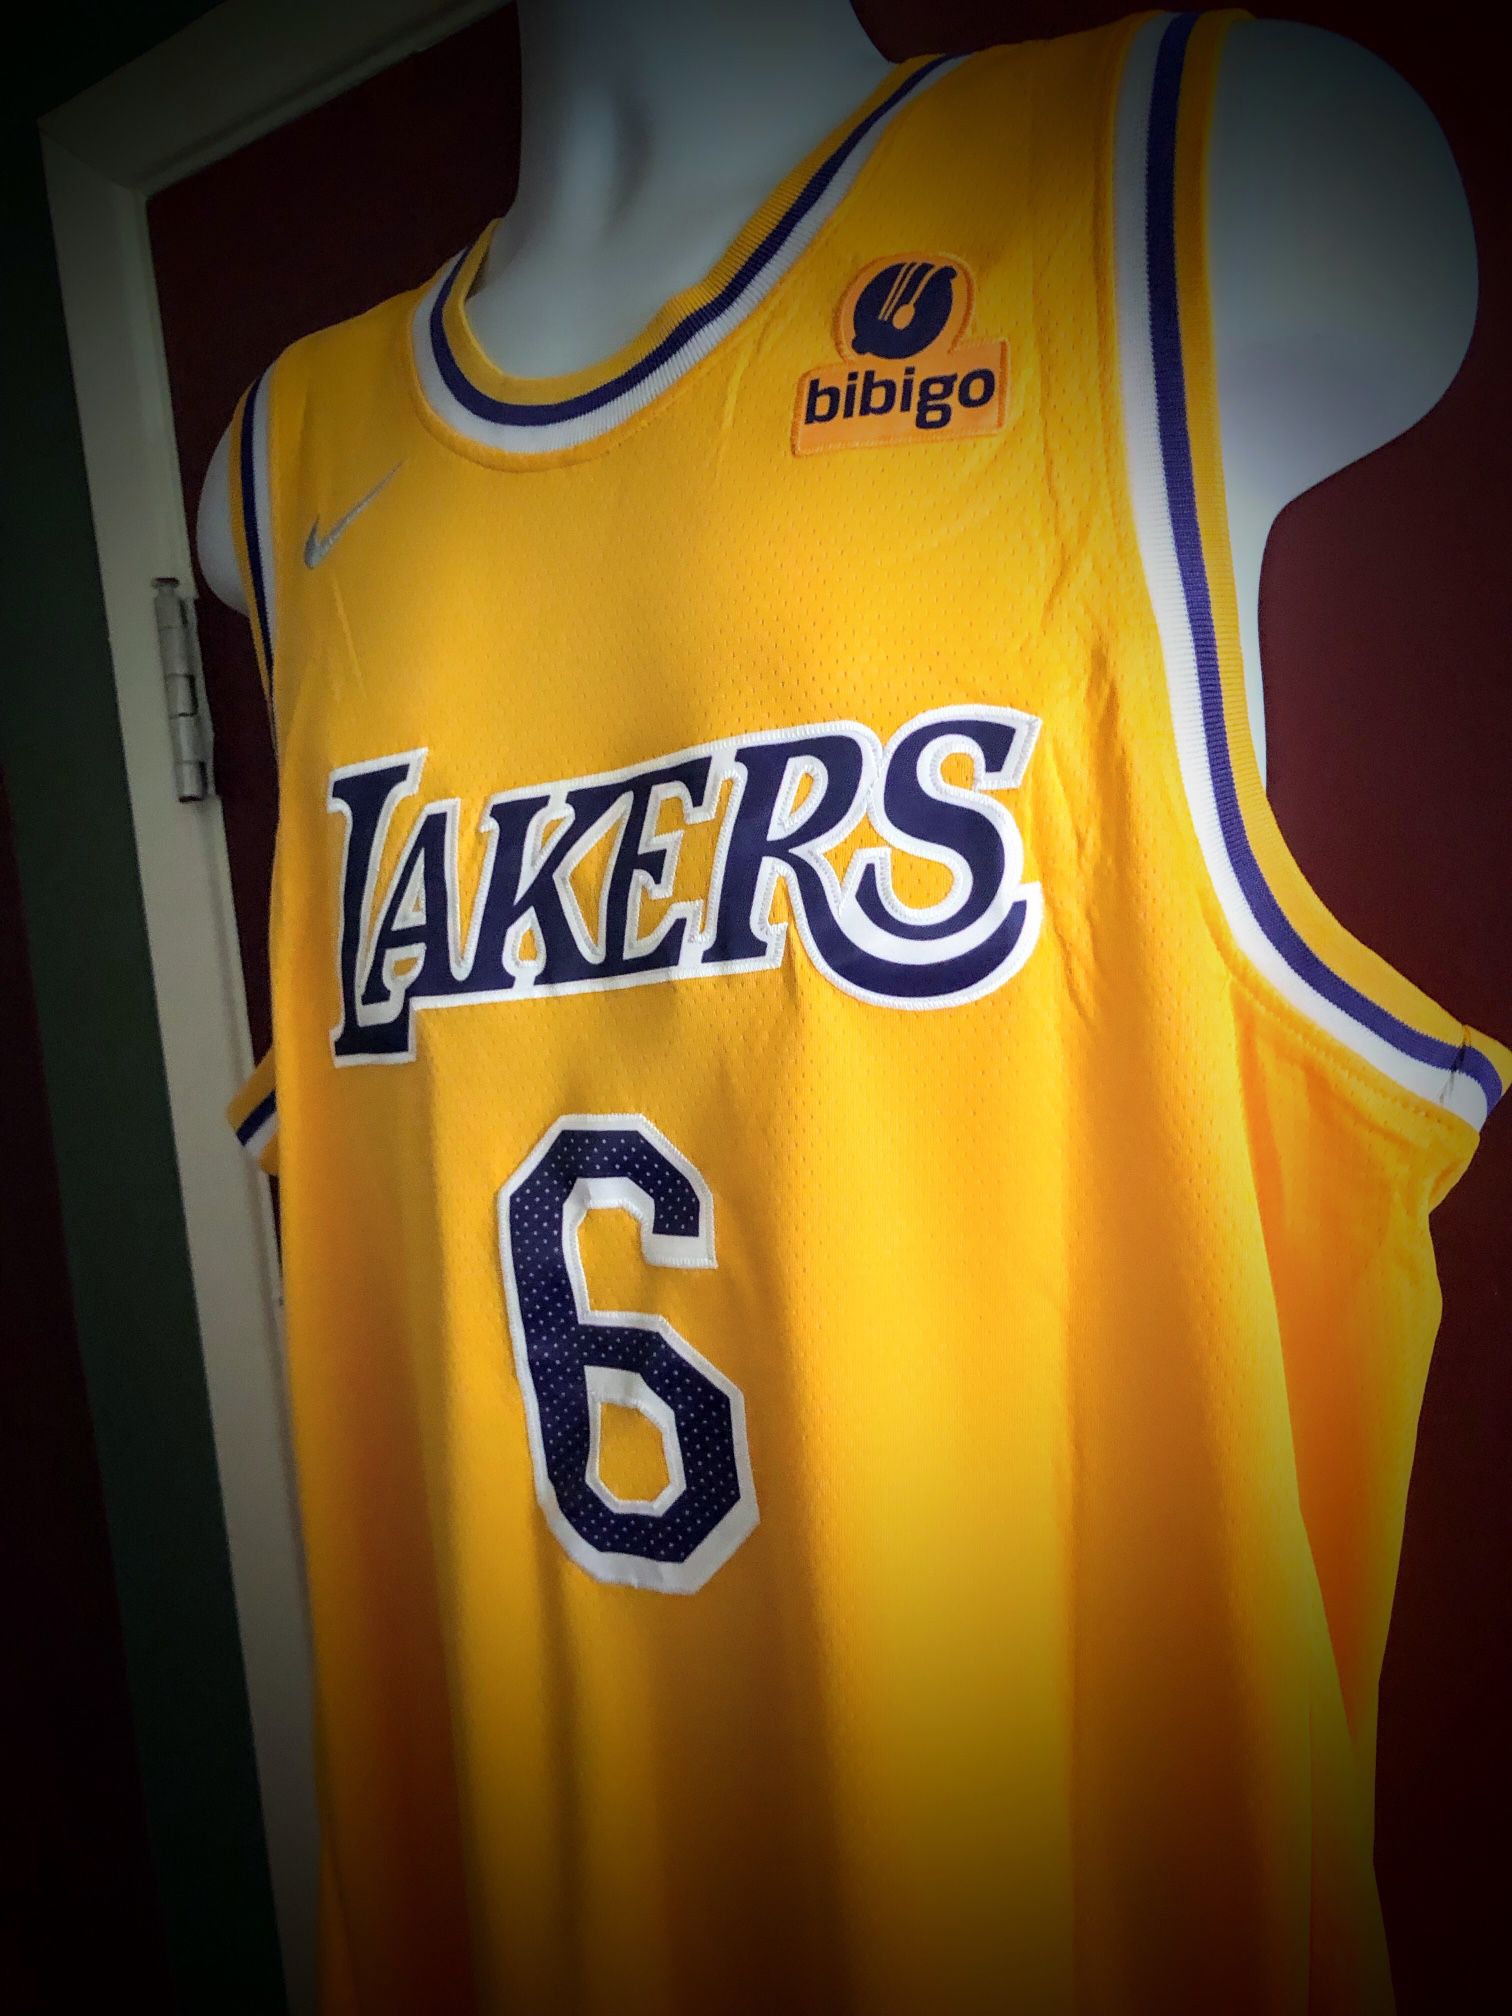 LEBRON JAMES #6 #LAKERCREW  Jersey, Basketball jersey, Basketball